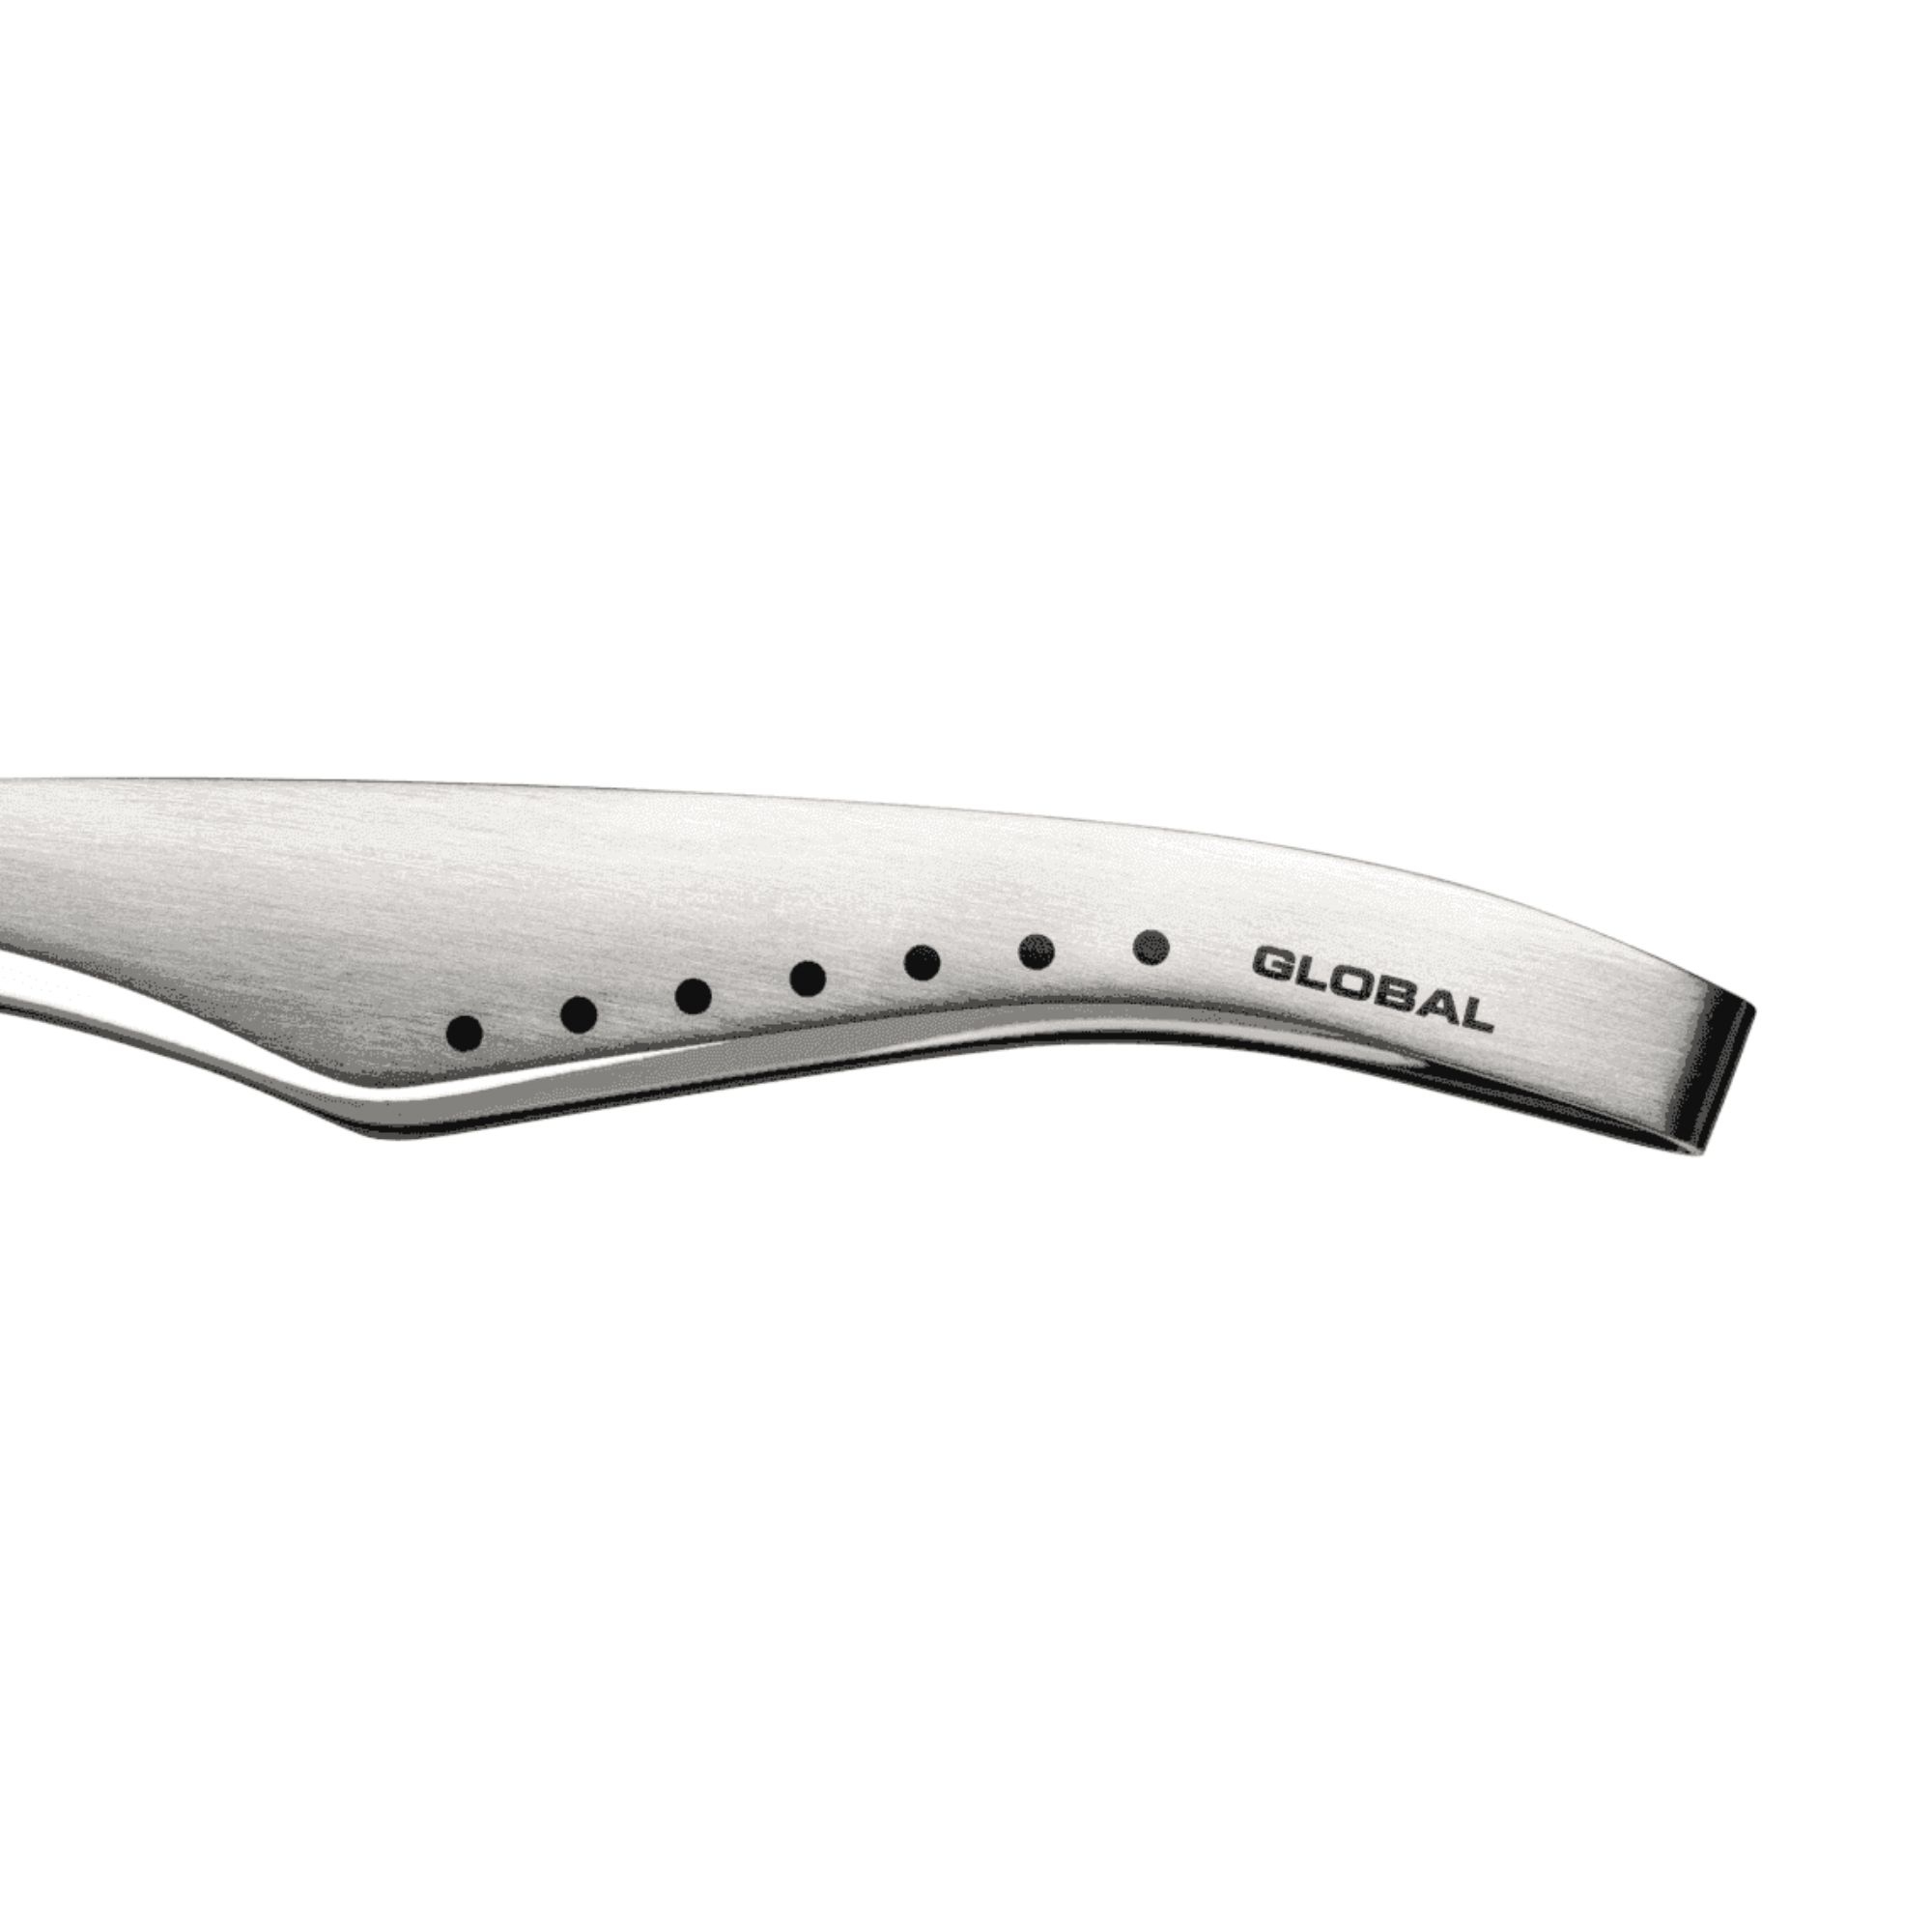 Global knives - GS107 - pinza cucina professionale cm 20 - accessorio cucina